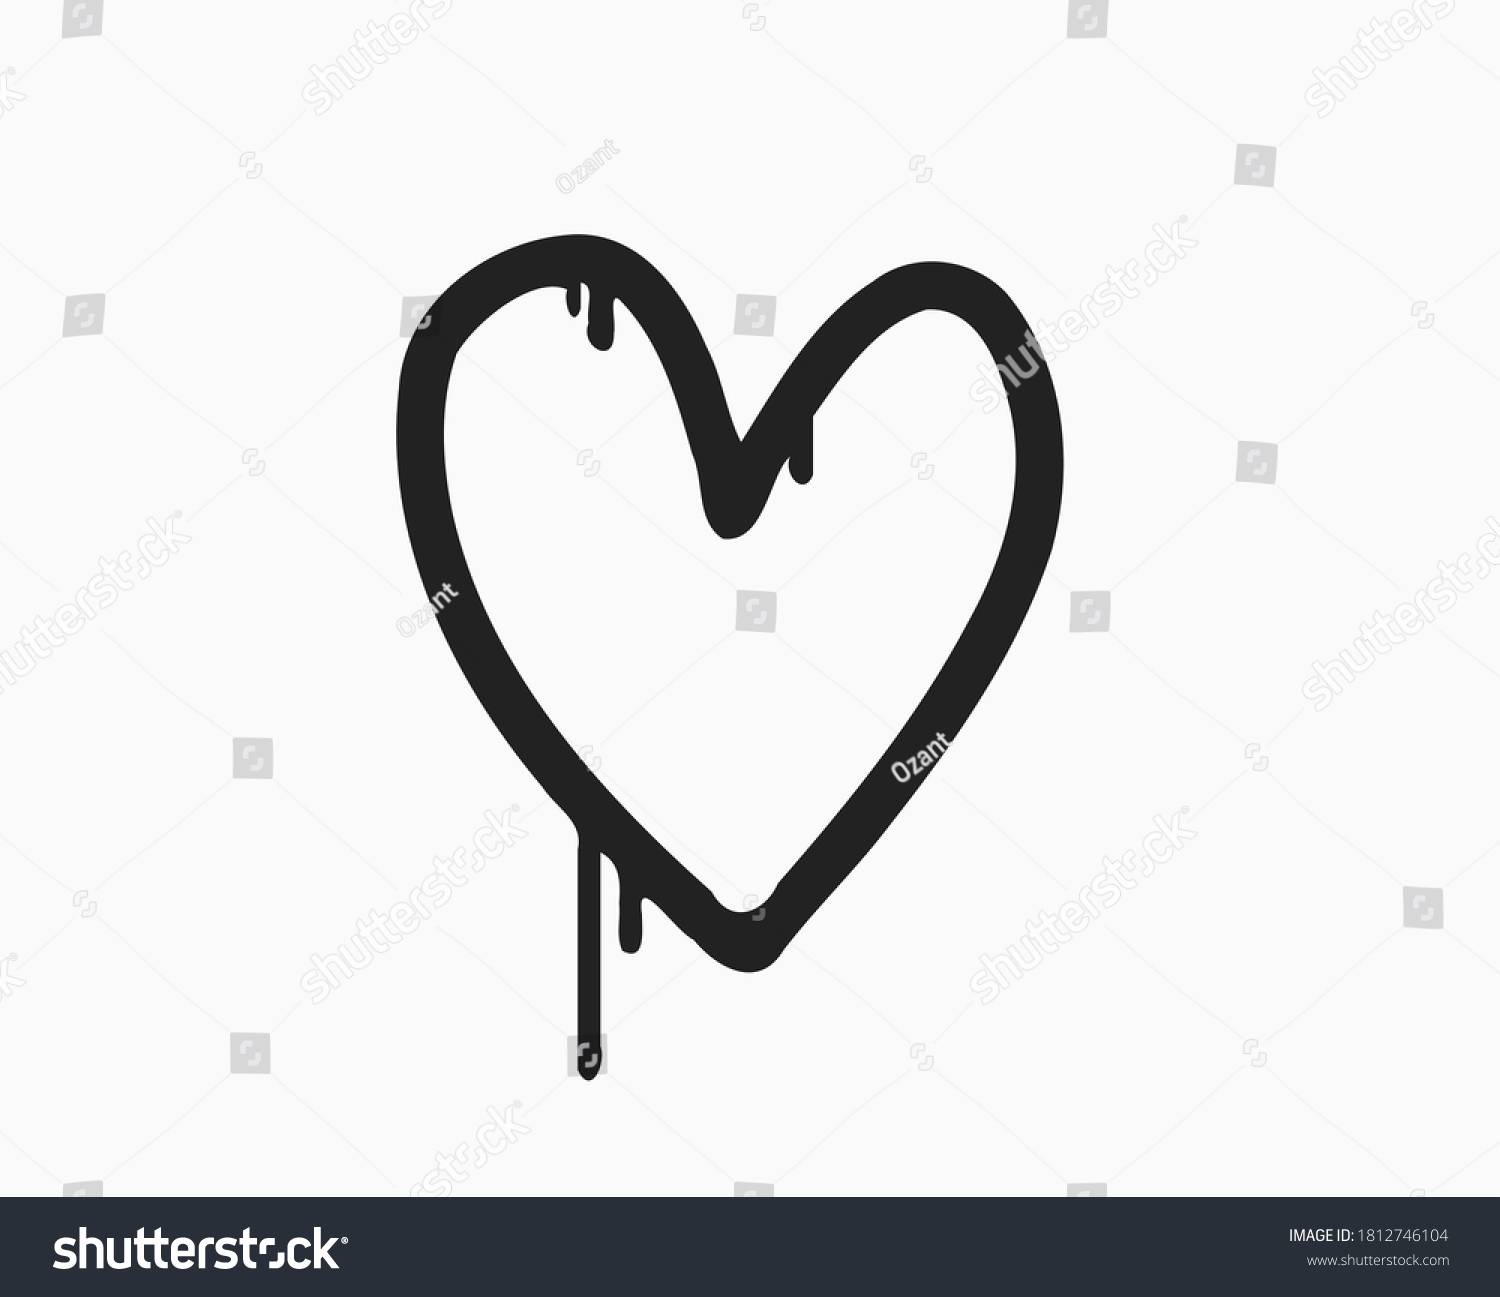 SVG of Vector illustration of graffiti love symbol sprayed in black over white svg